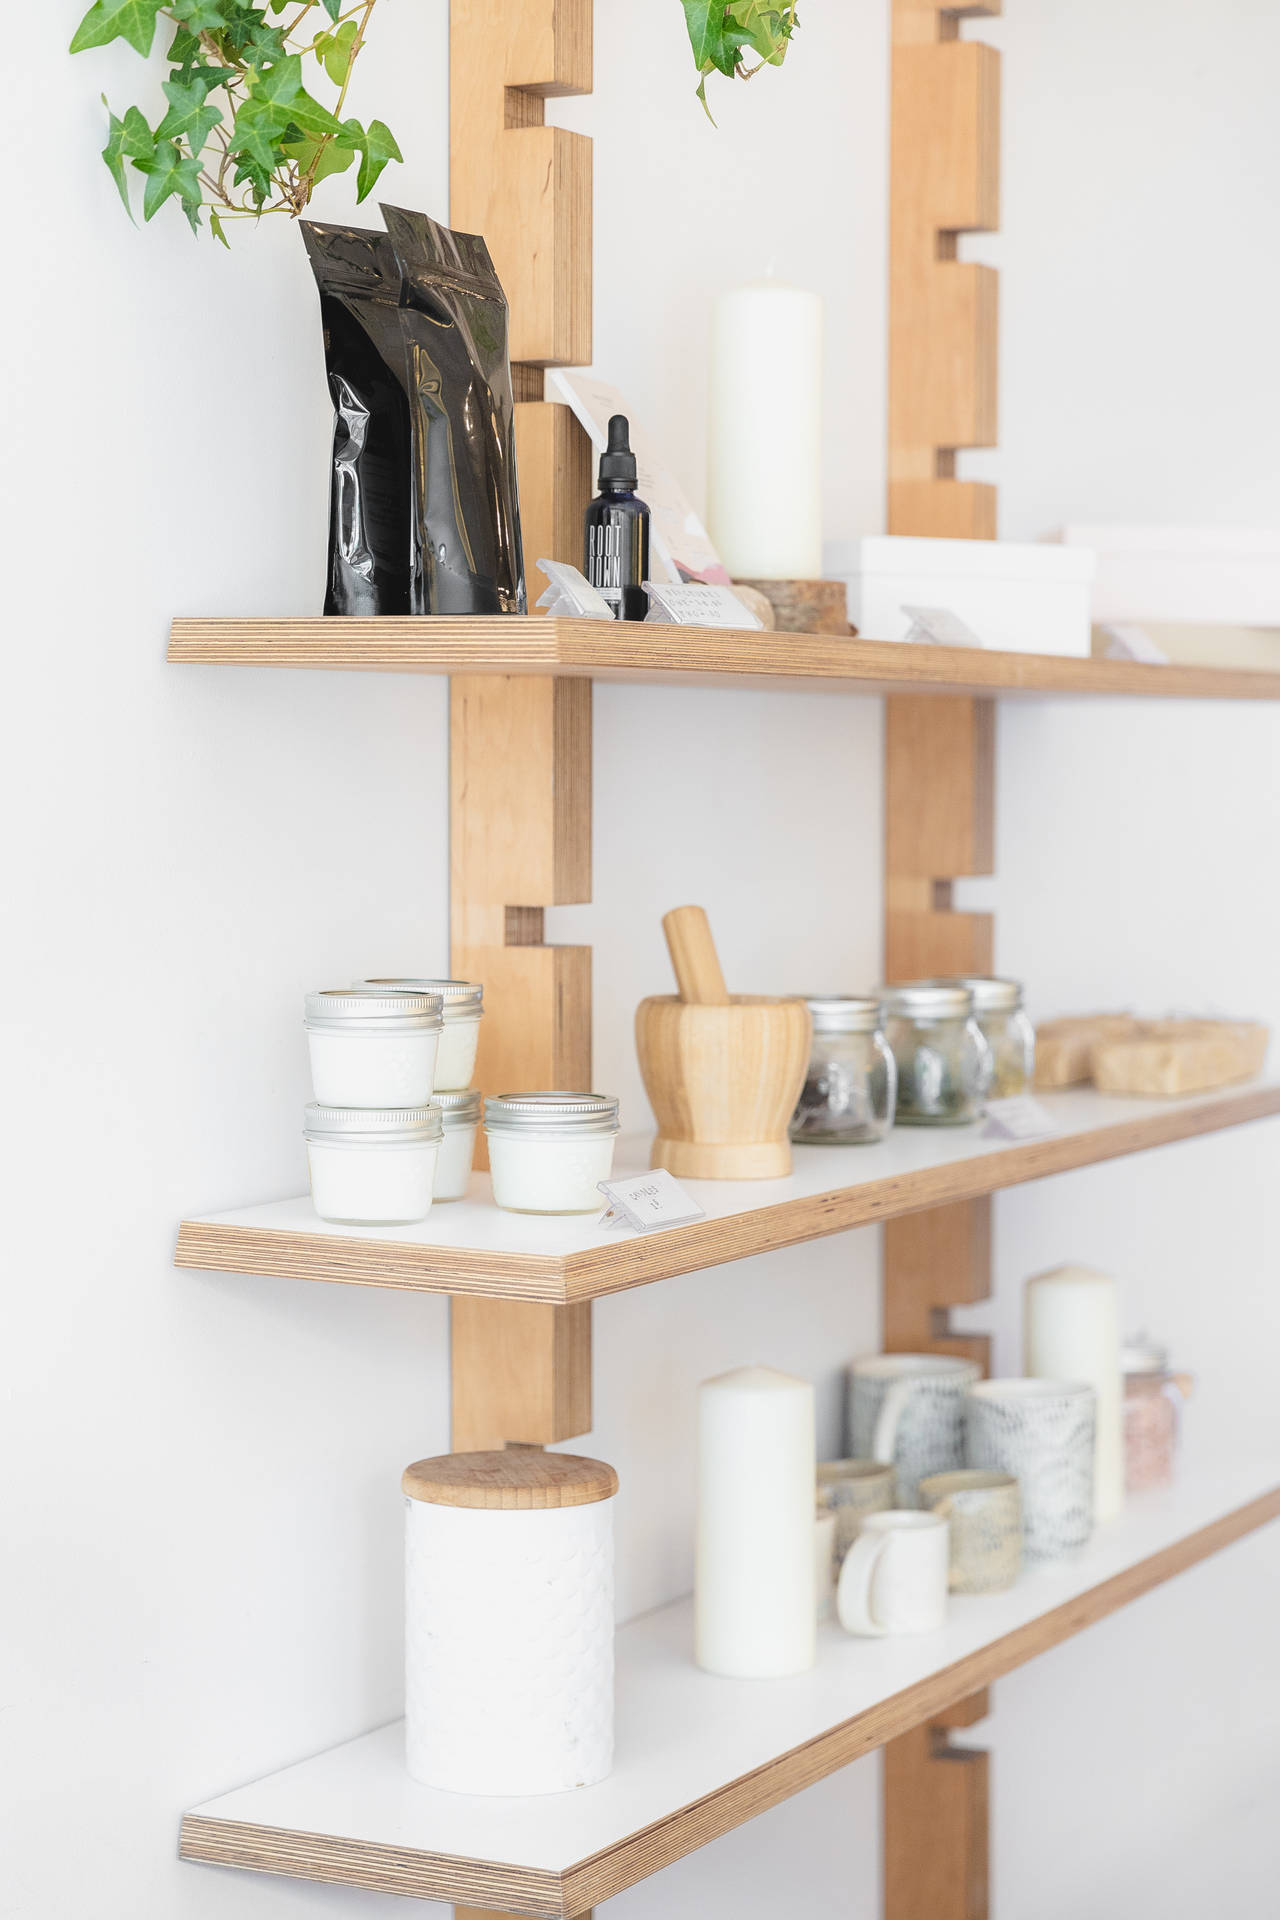 Ceramics On Shelves Background